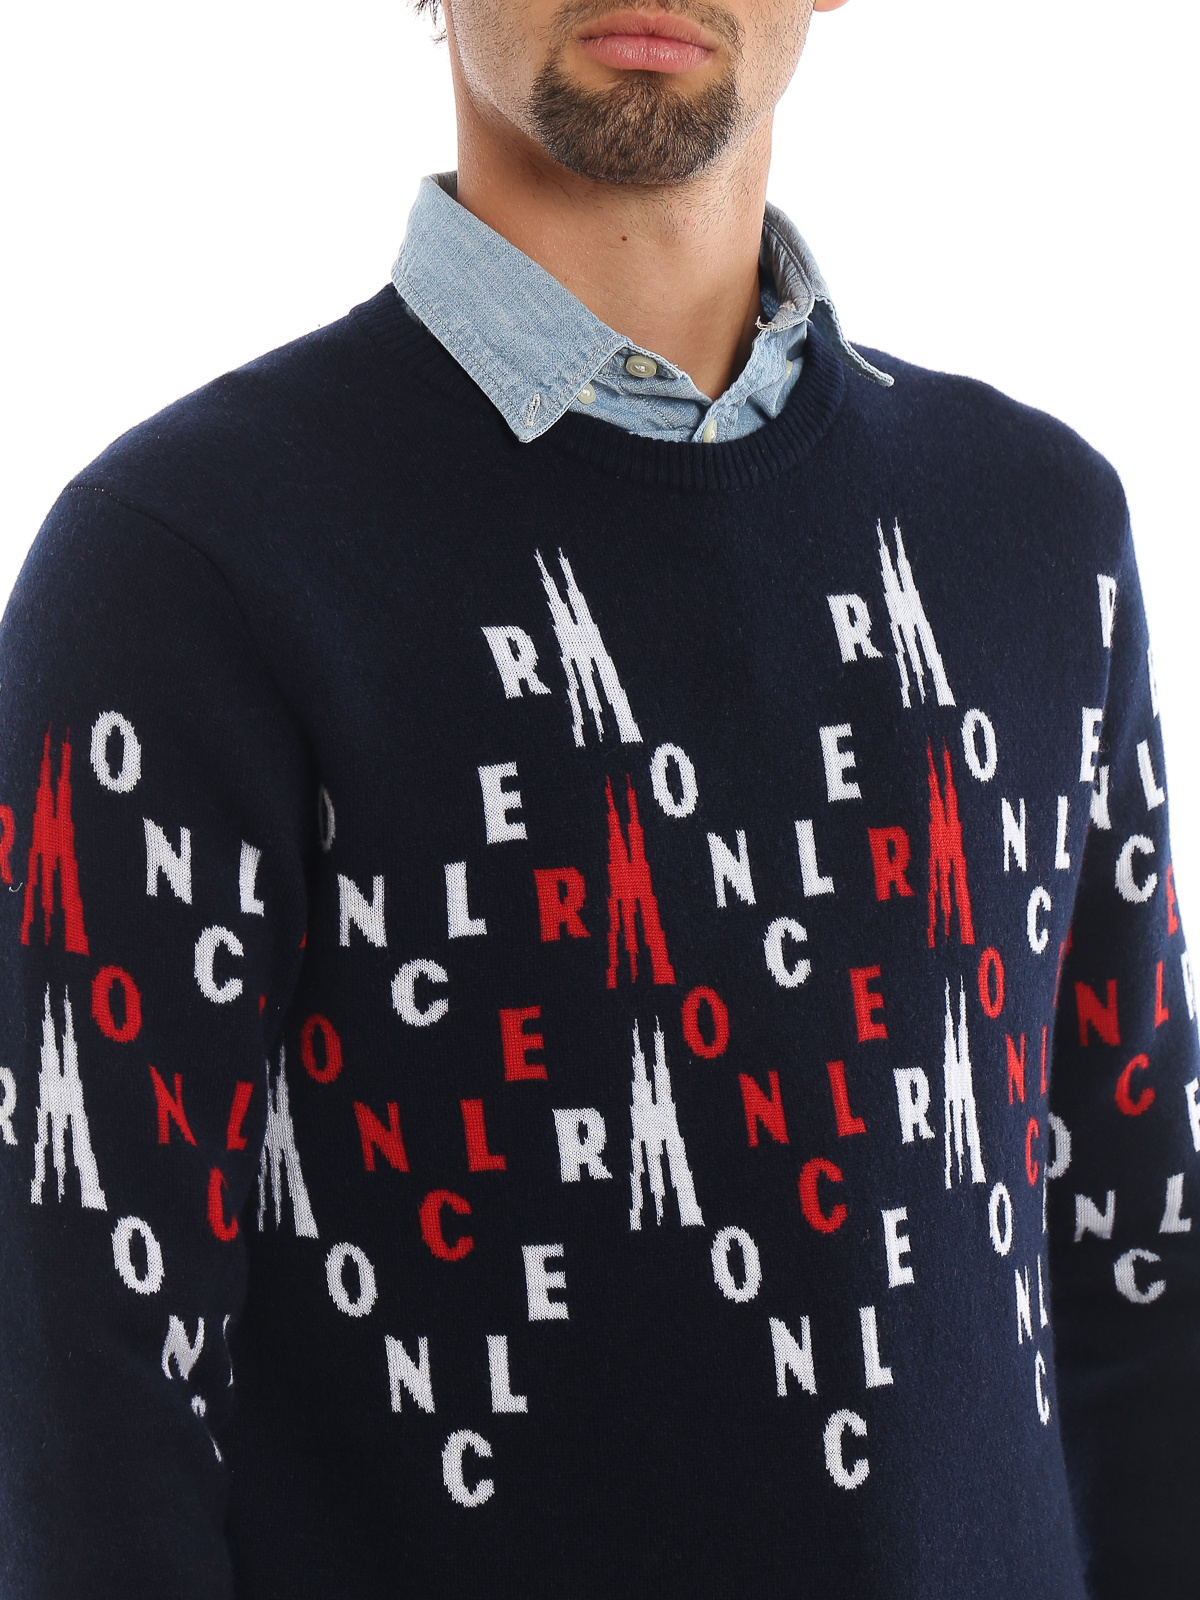 Informeer Patch methaan Crew necks Moncler - Logo wool jacquard sweater - E20919041700A9045778